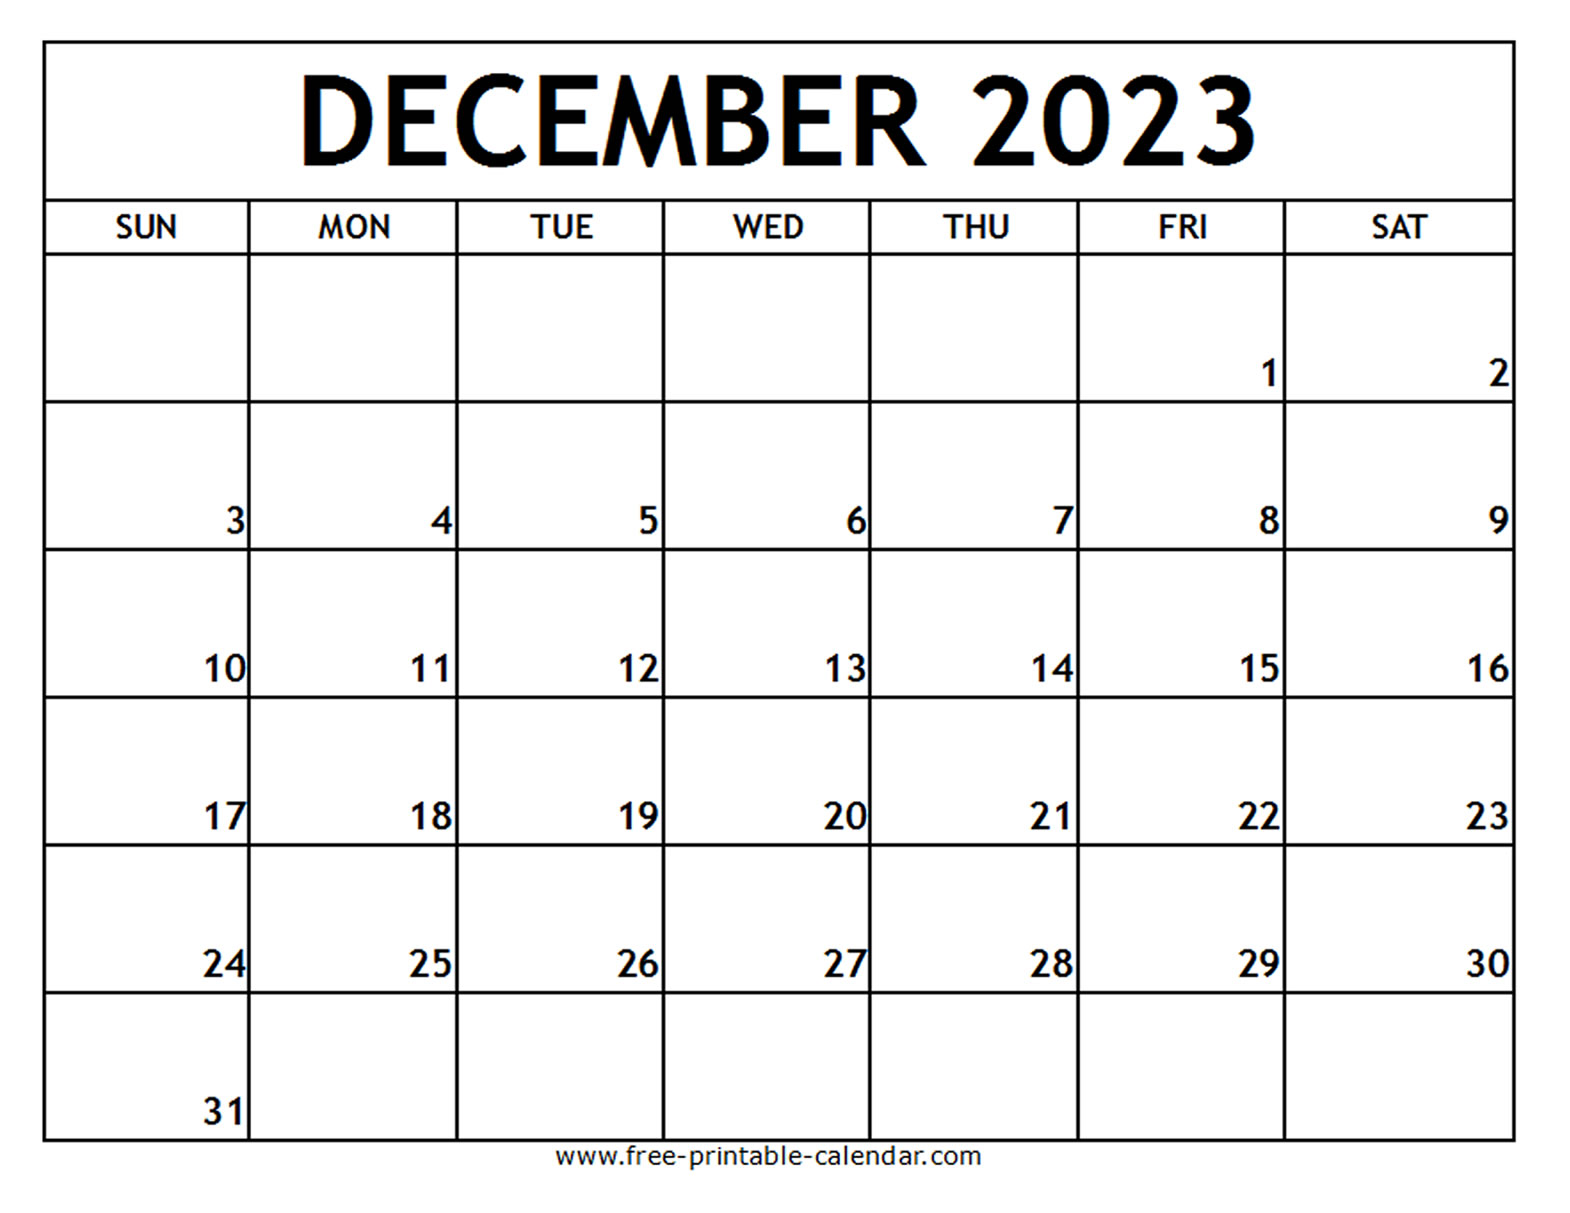 December 2023 Calendar Printable Free â€“ Get Calendar 2023 Update